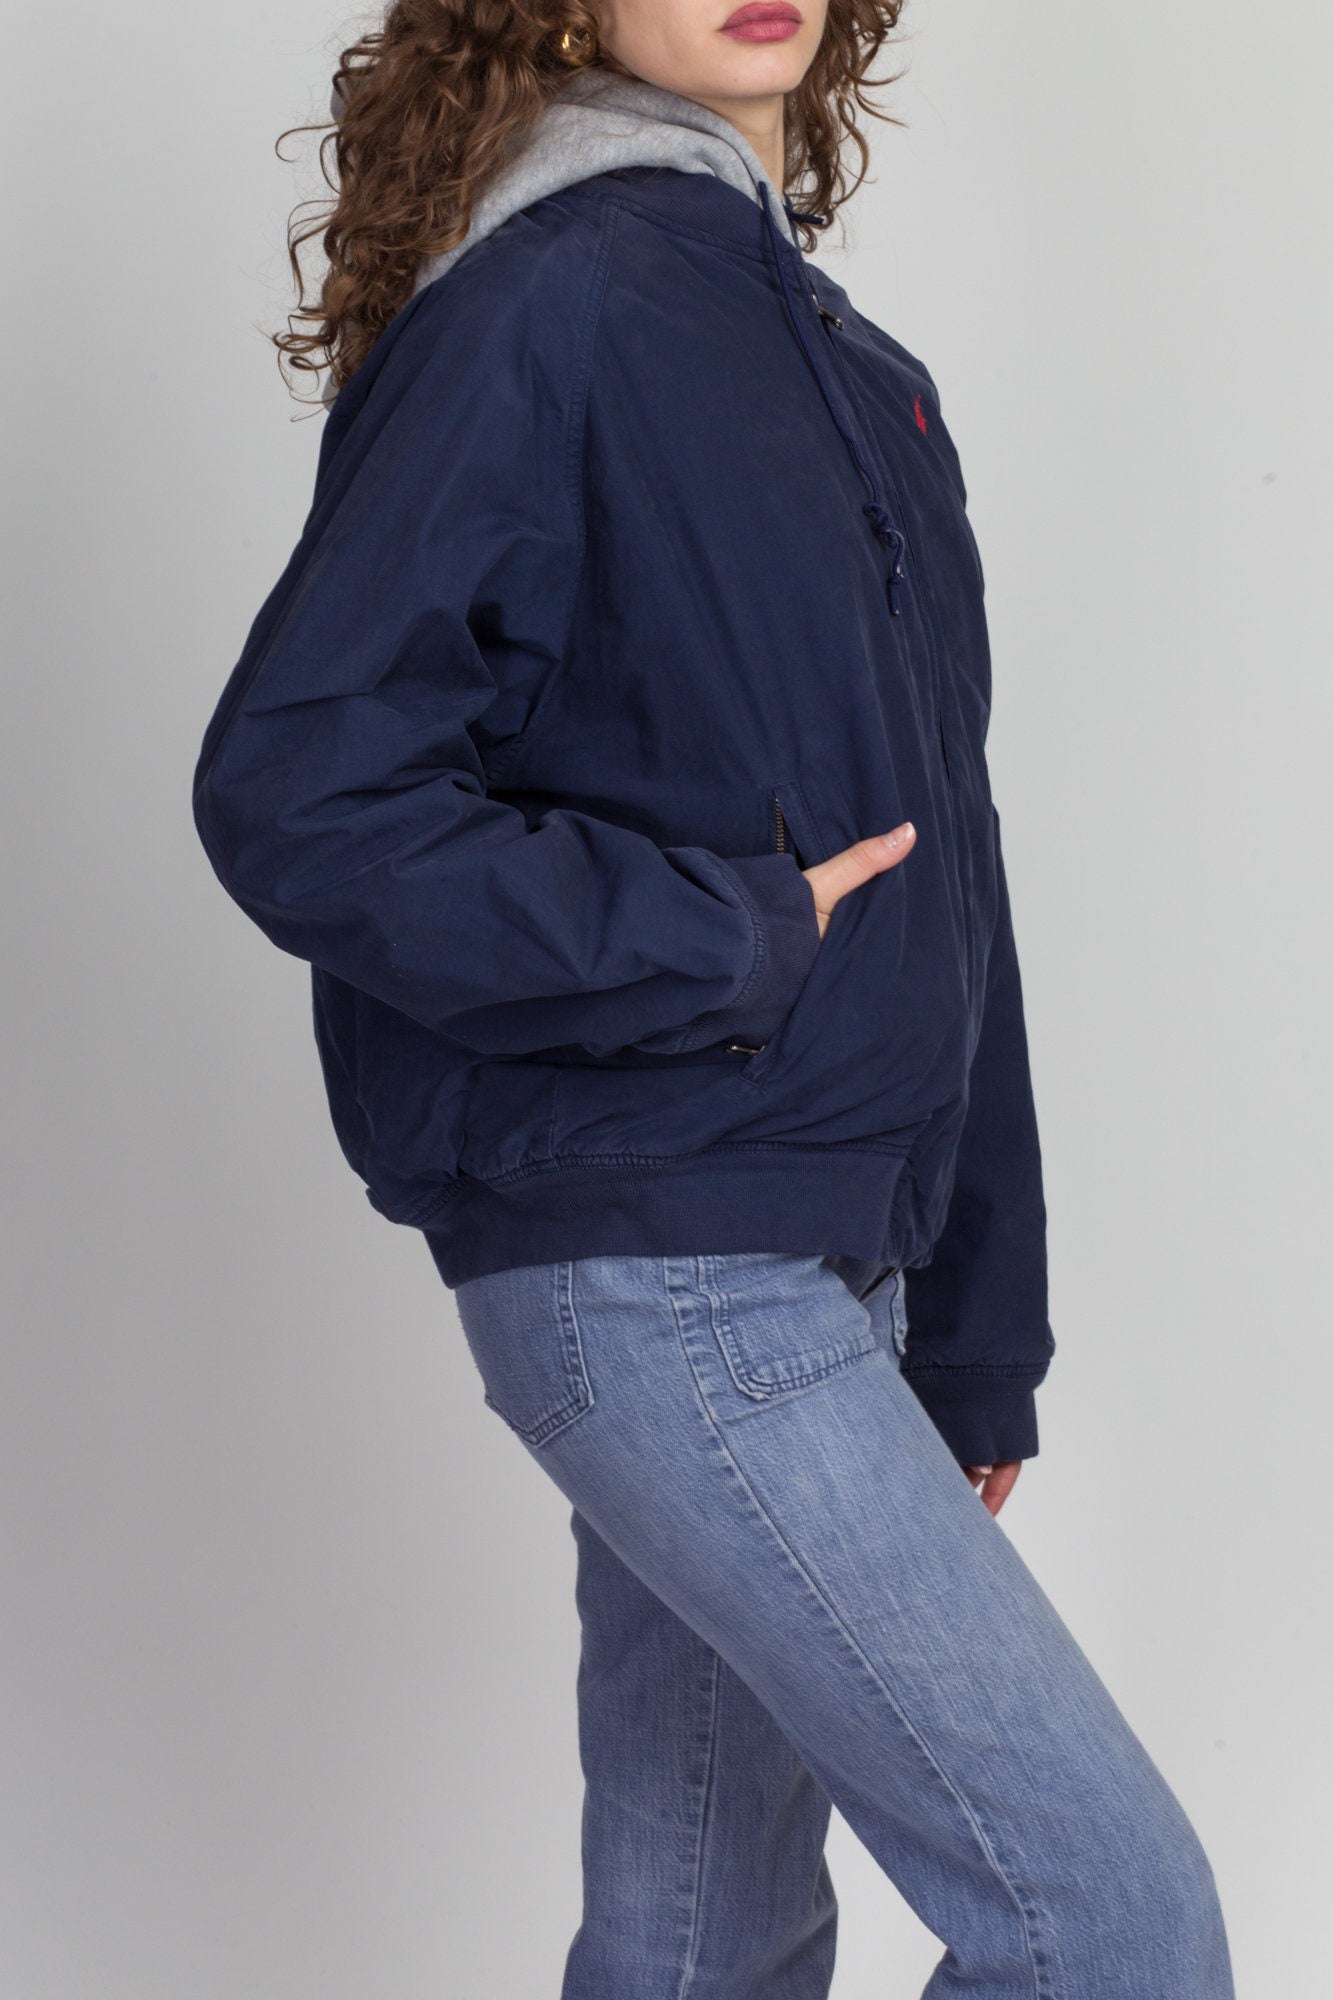 Polo Ralph Lauren 3 Nylon Bomber Jacket Vintage | eBay